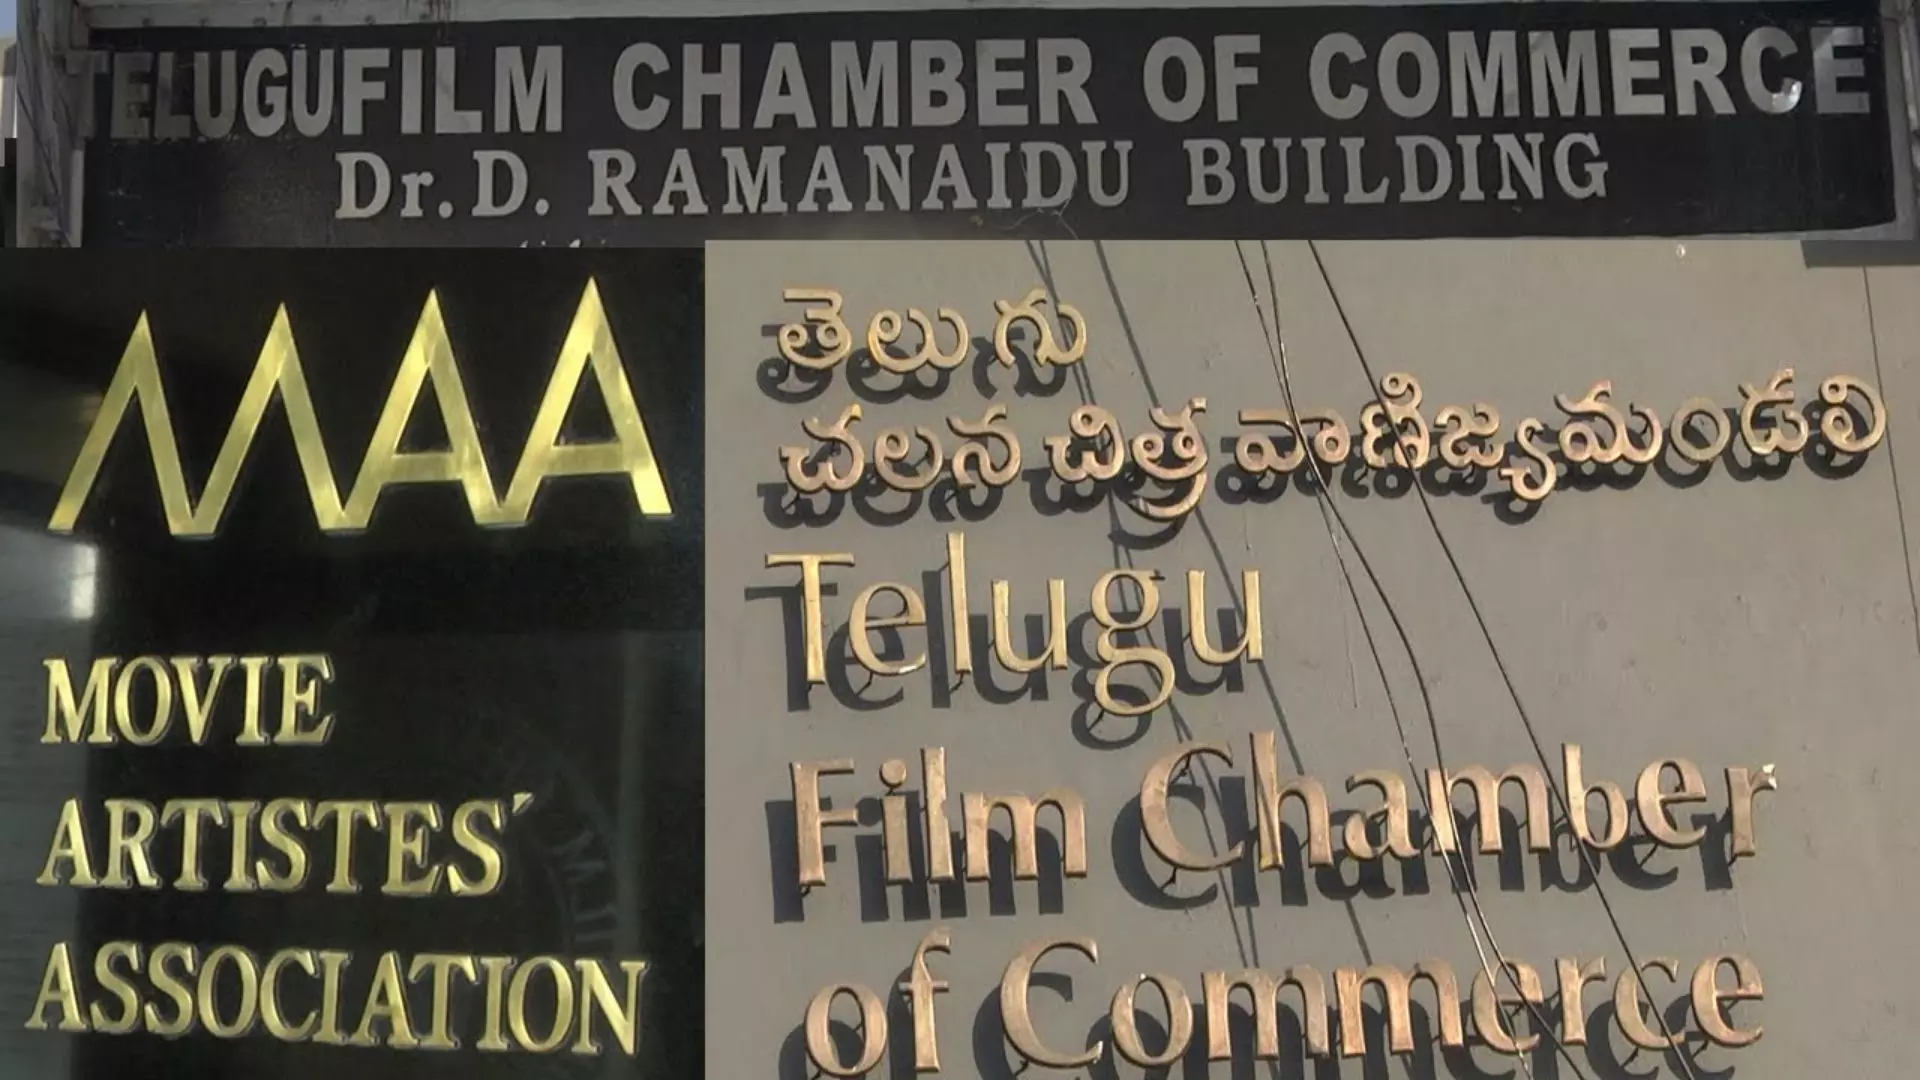 Movie Association Elections Around MAA Building